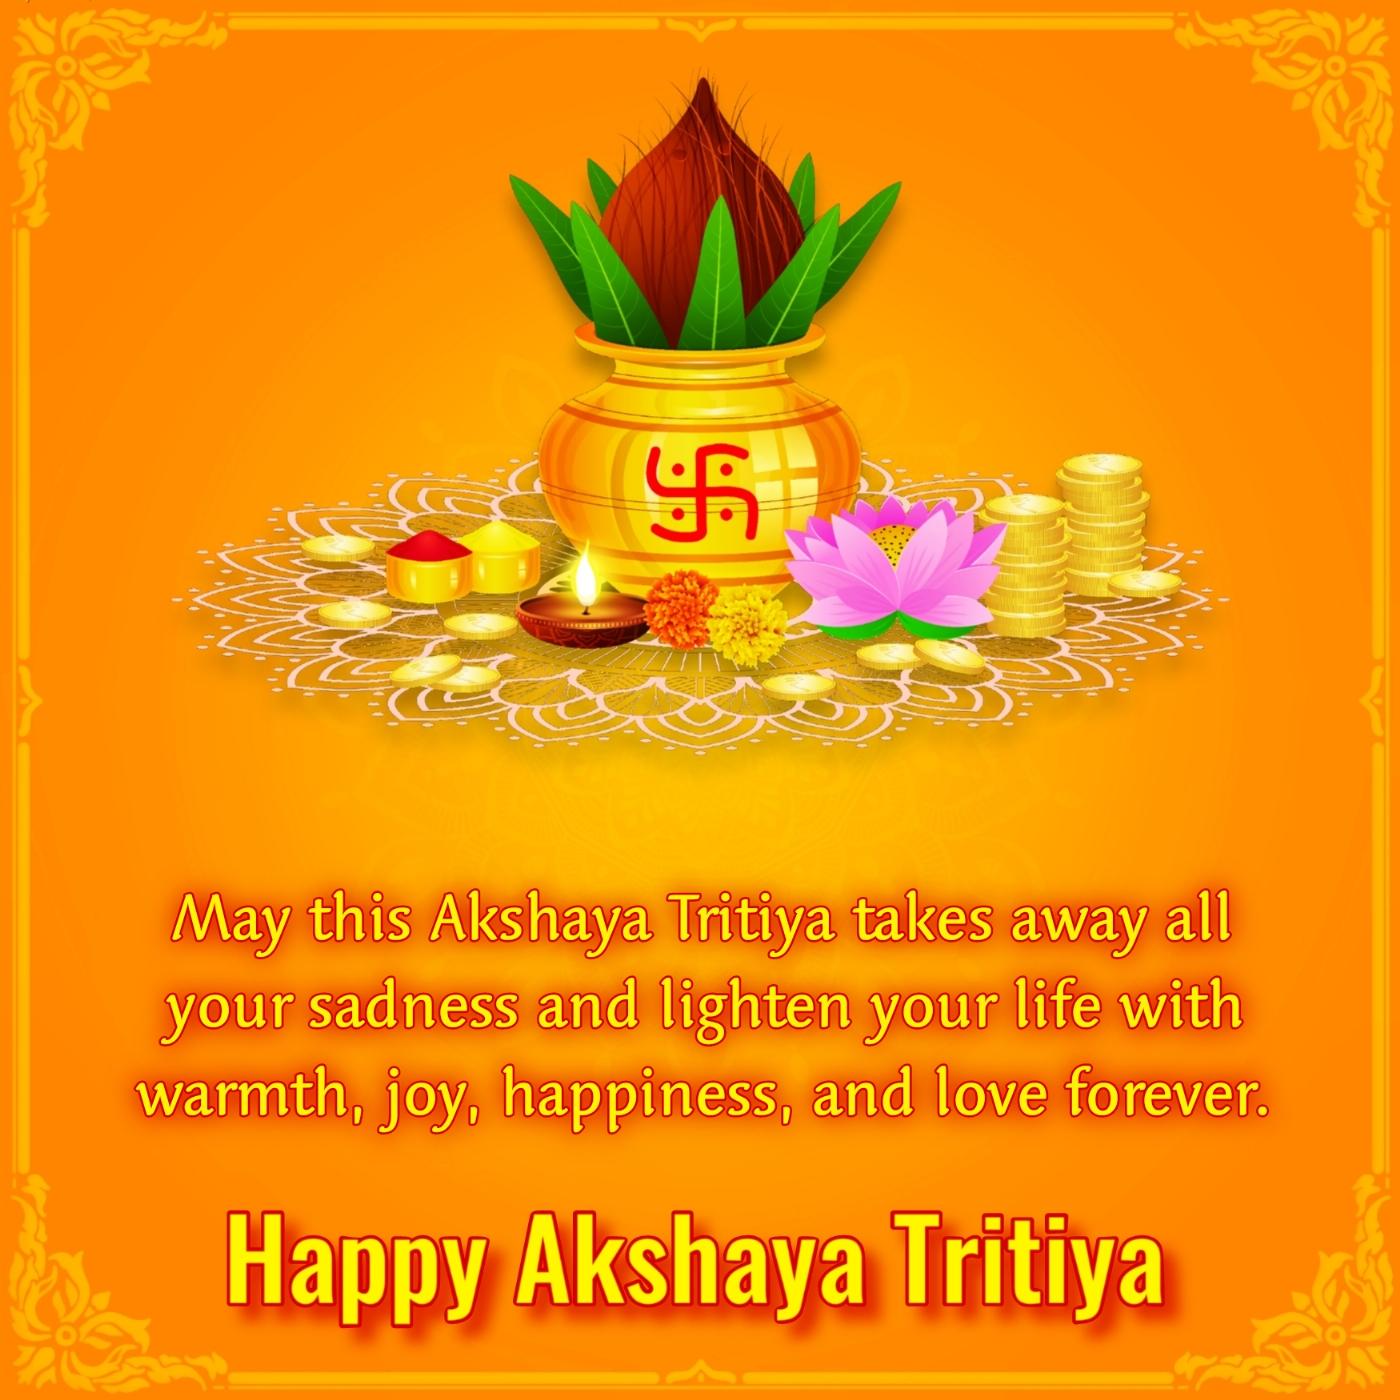 May this Akshaya Tritiya takes away all your sadness and lighten your life